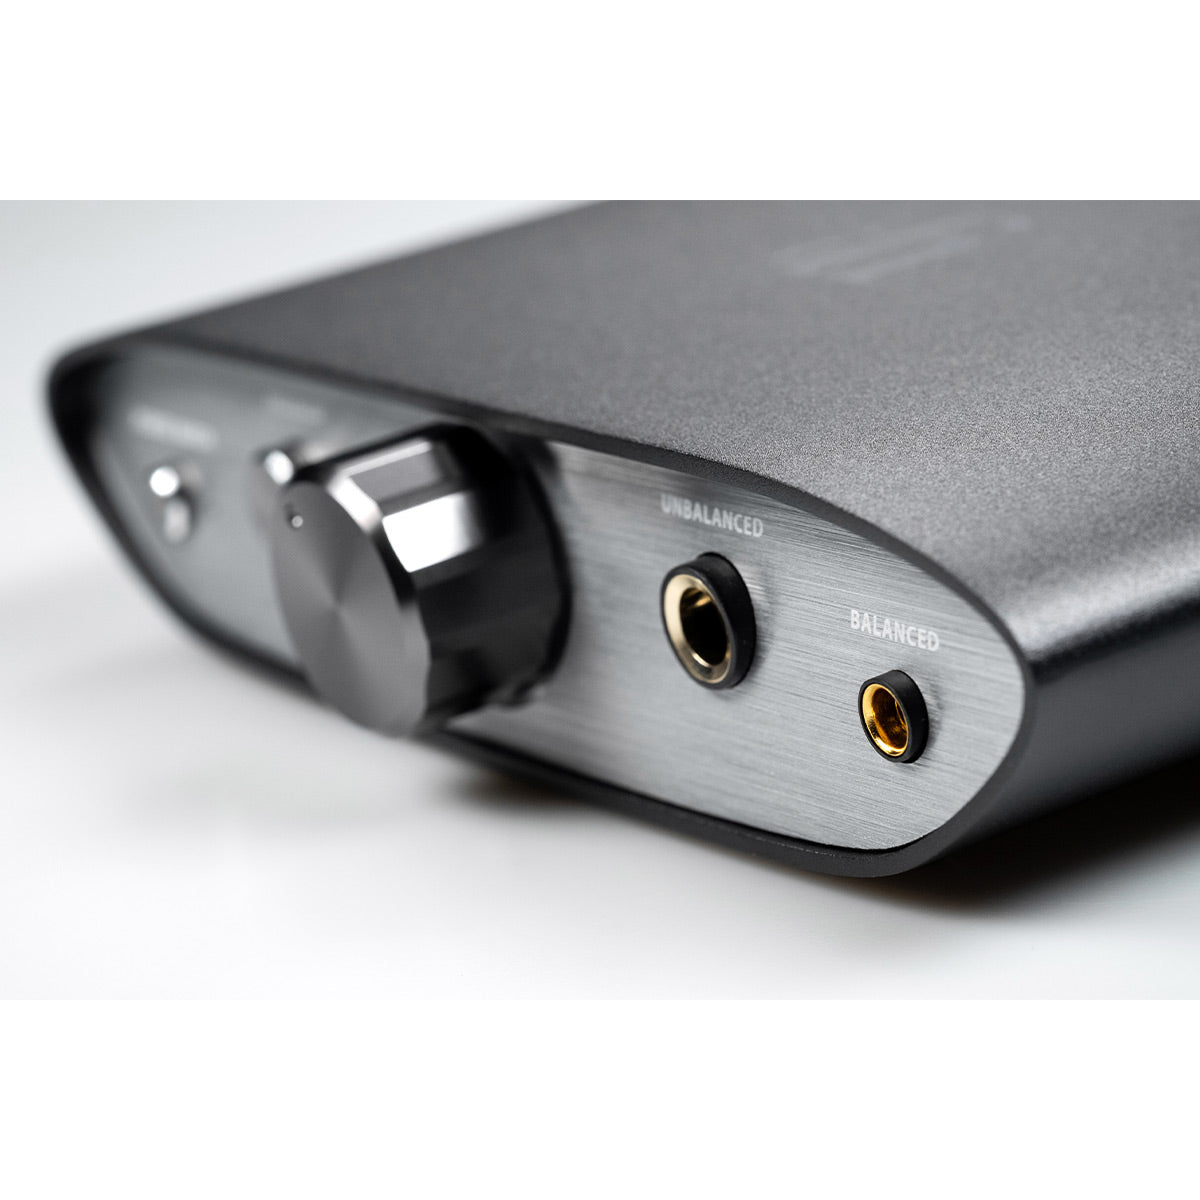 iFi Audio ZEN DAC V2 Desktop USB DAC and Headphone Amplifier